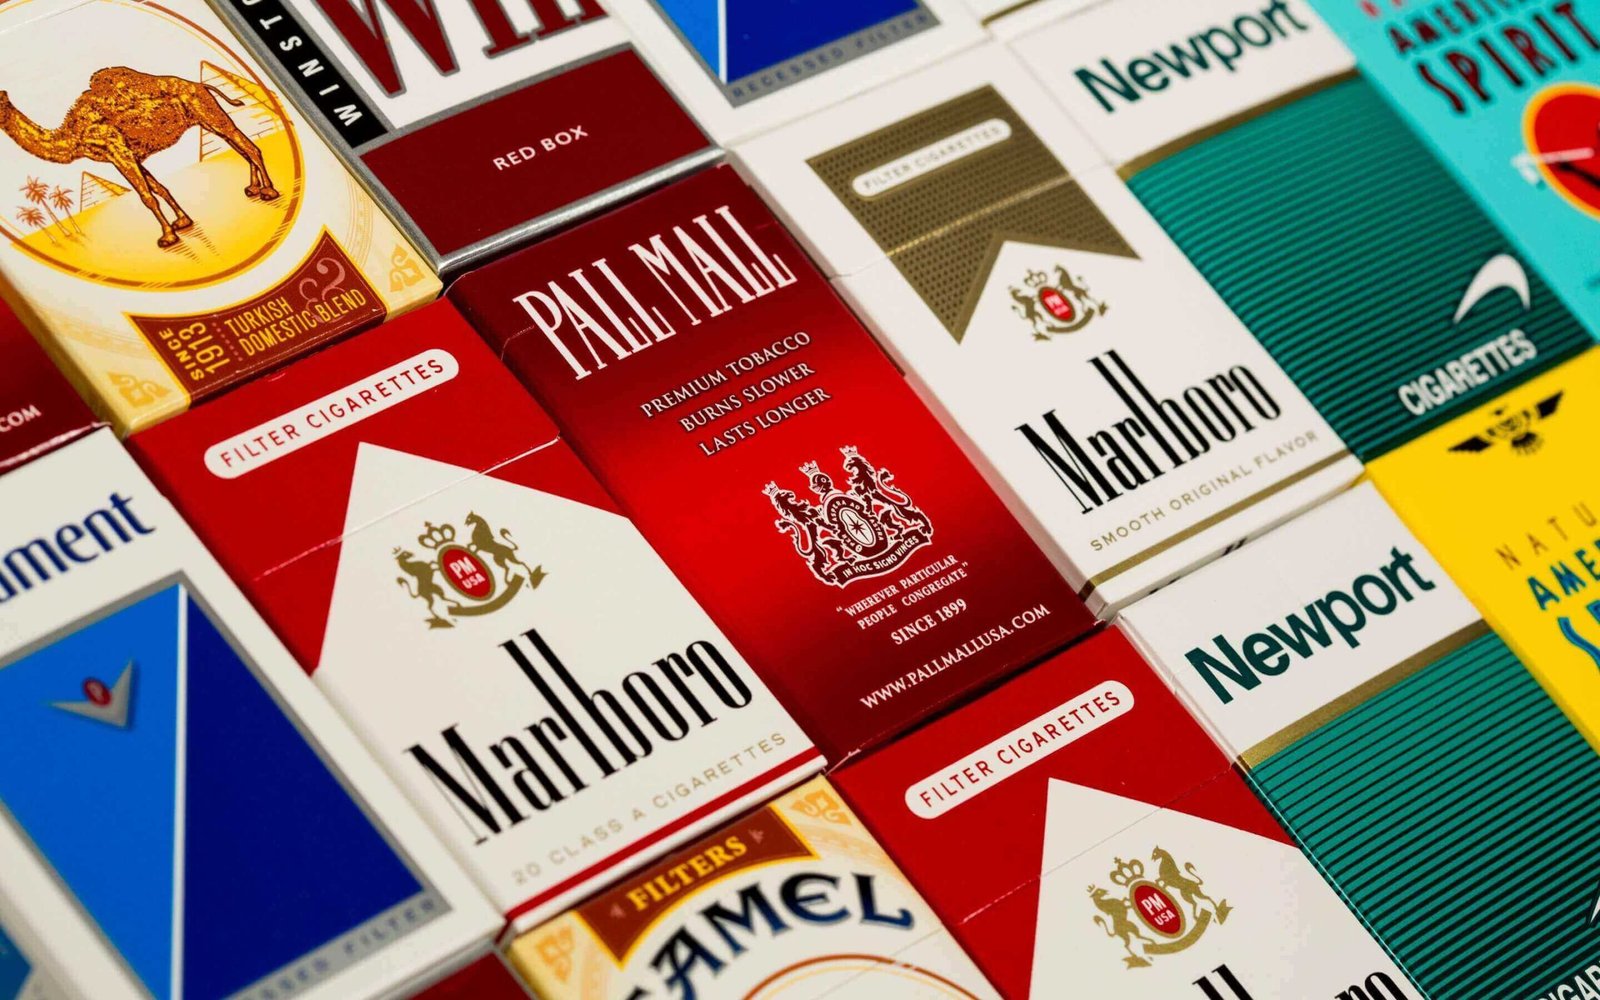 Most Popular Cigarette Brands in the UK